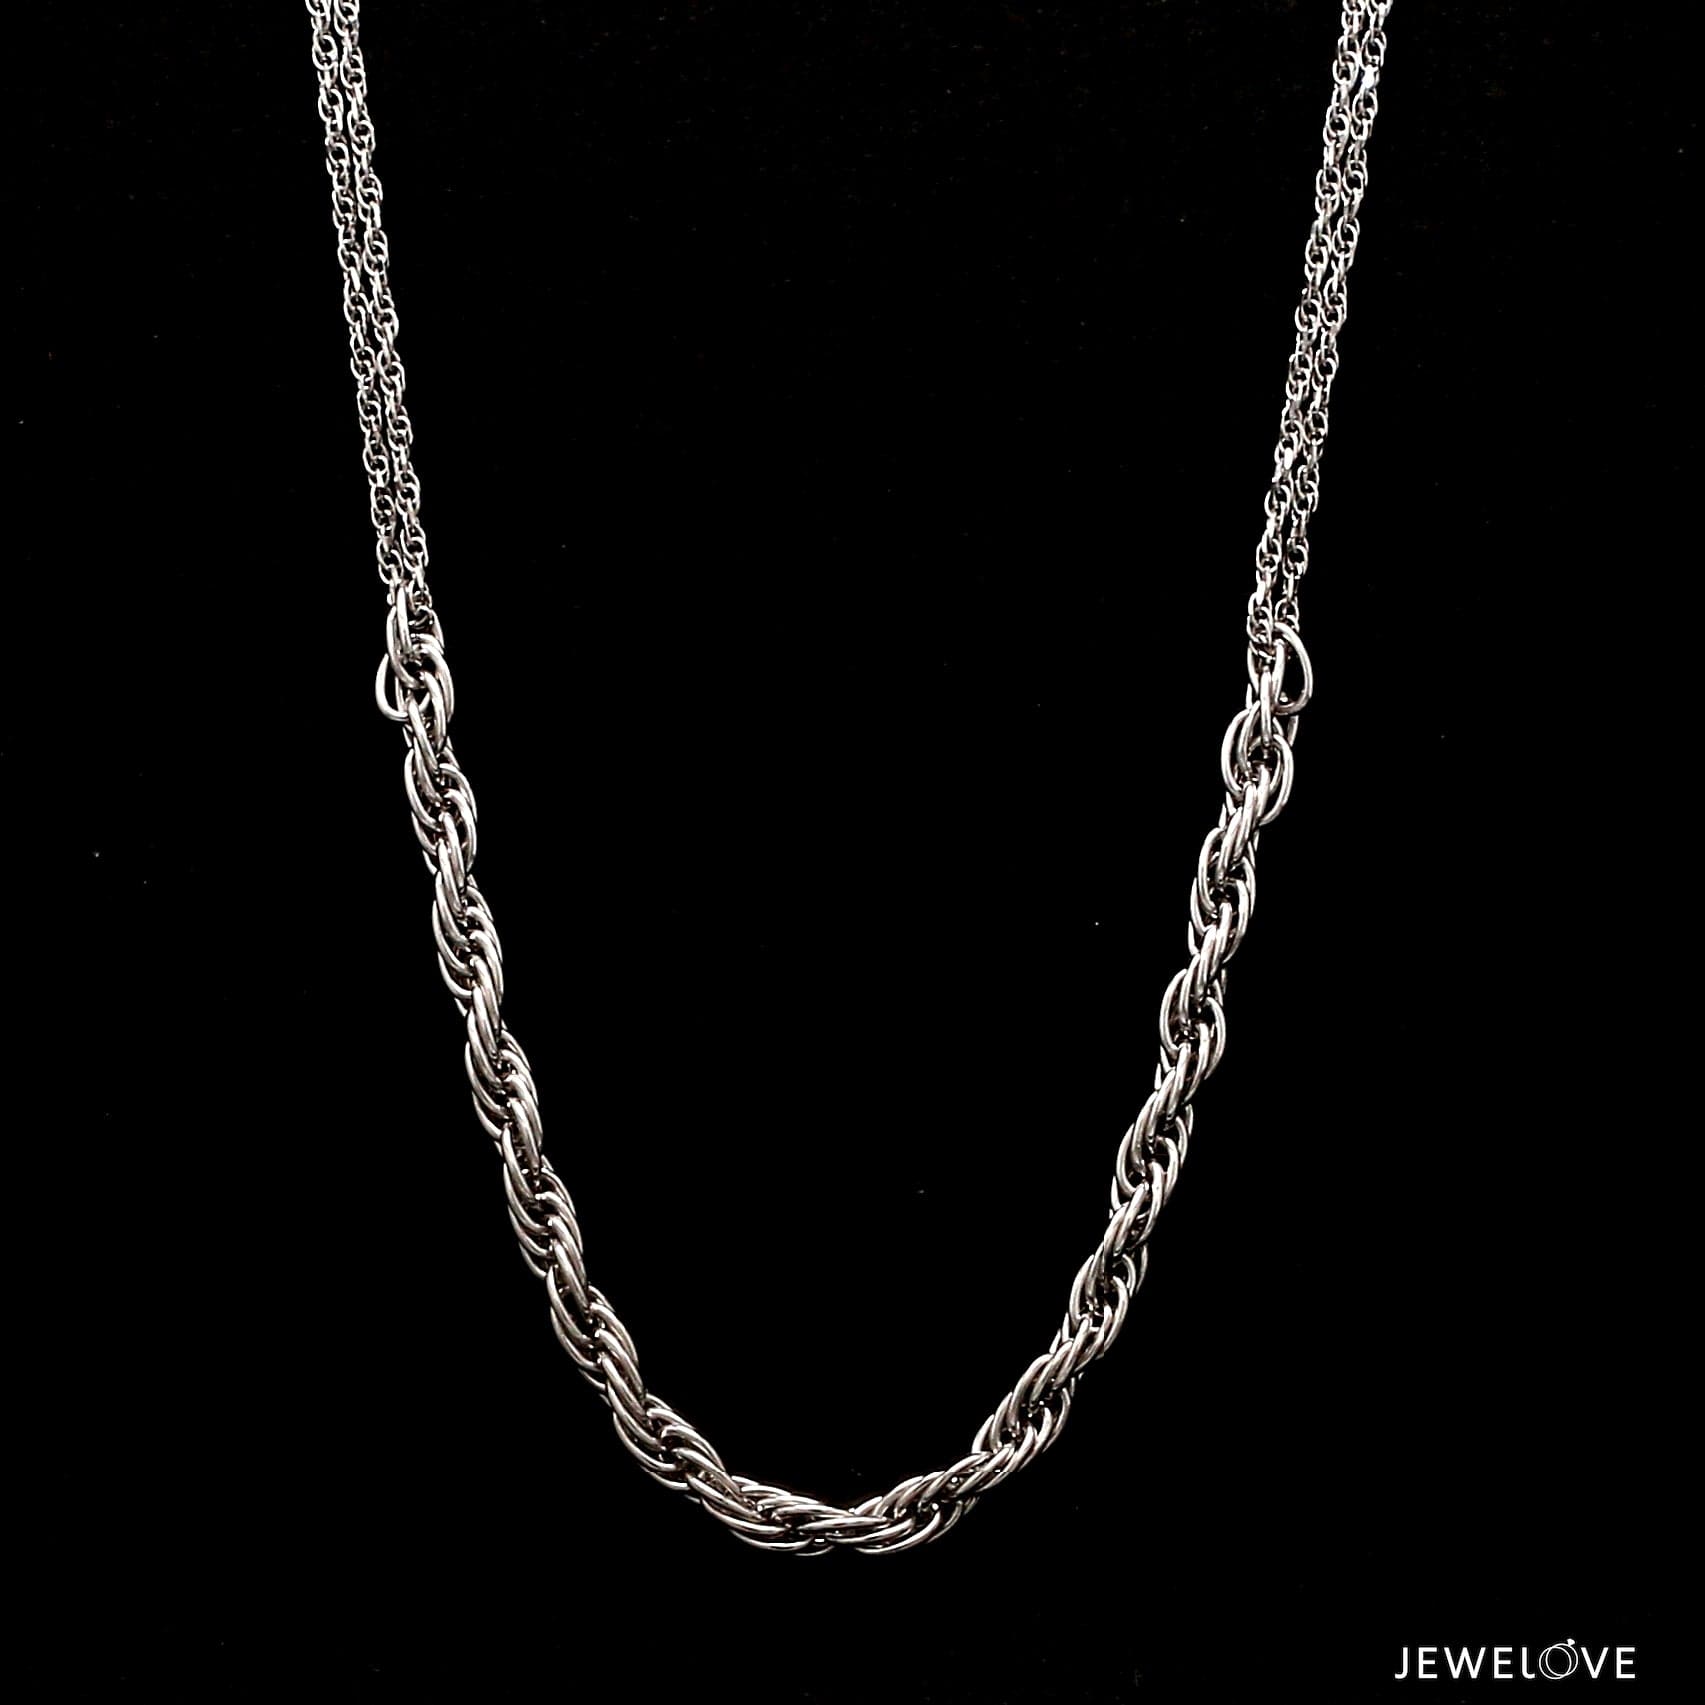 DY Madison Elongated Chain Necklace in 18K Yellow Gold, 3.5mm | David Yurman